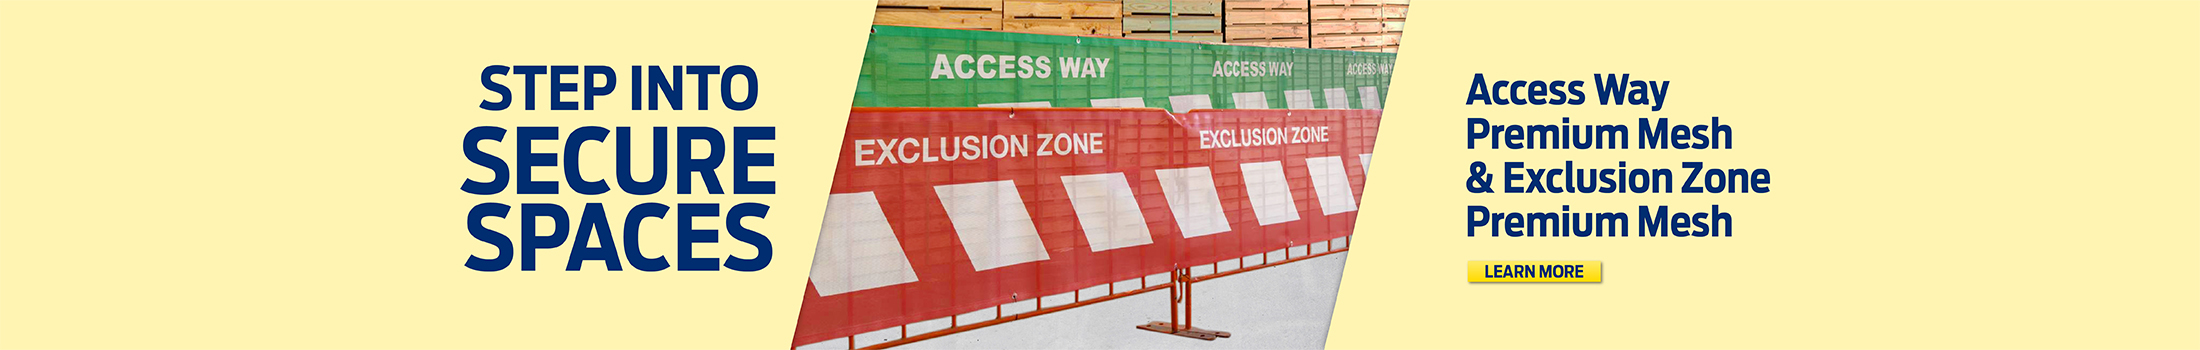 Access Way and Exclusion Zone Premium Mesh (AU Desktop Banner)